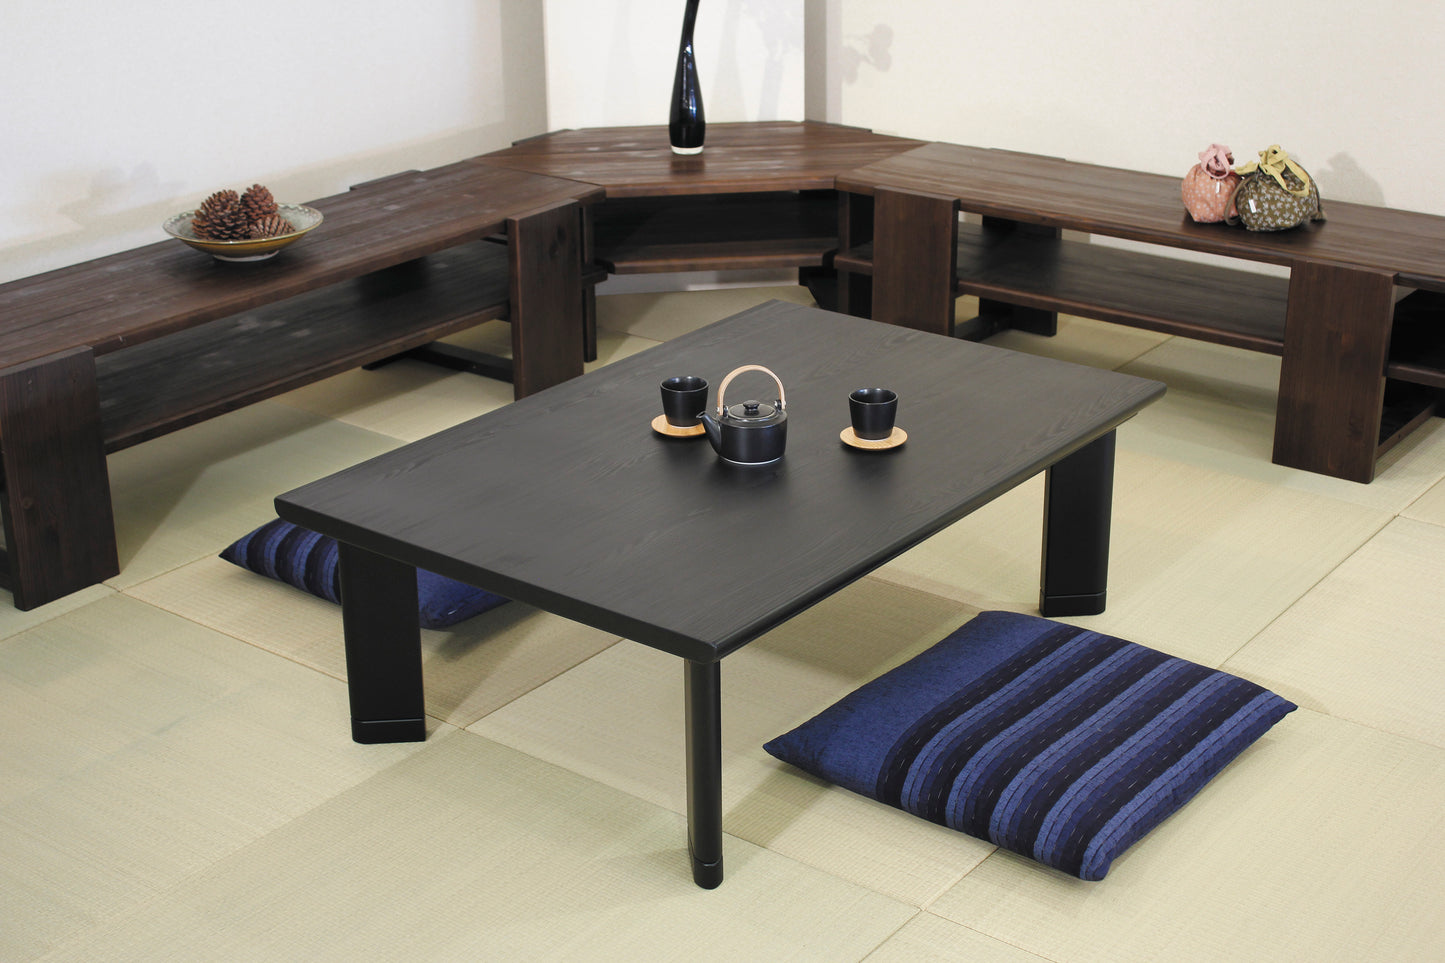 Japanese Cedar Kotatu Ayano -  Low table with Electric Heater